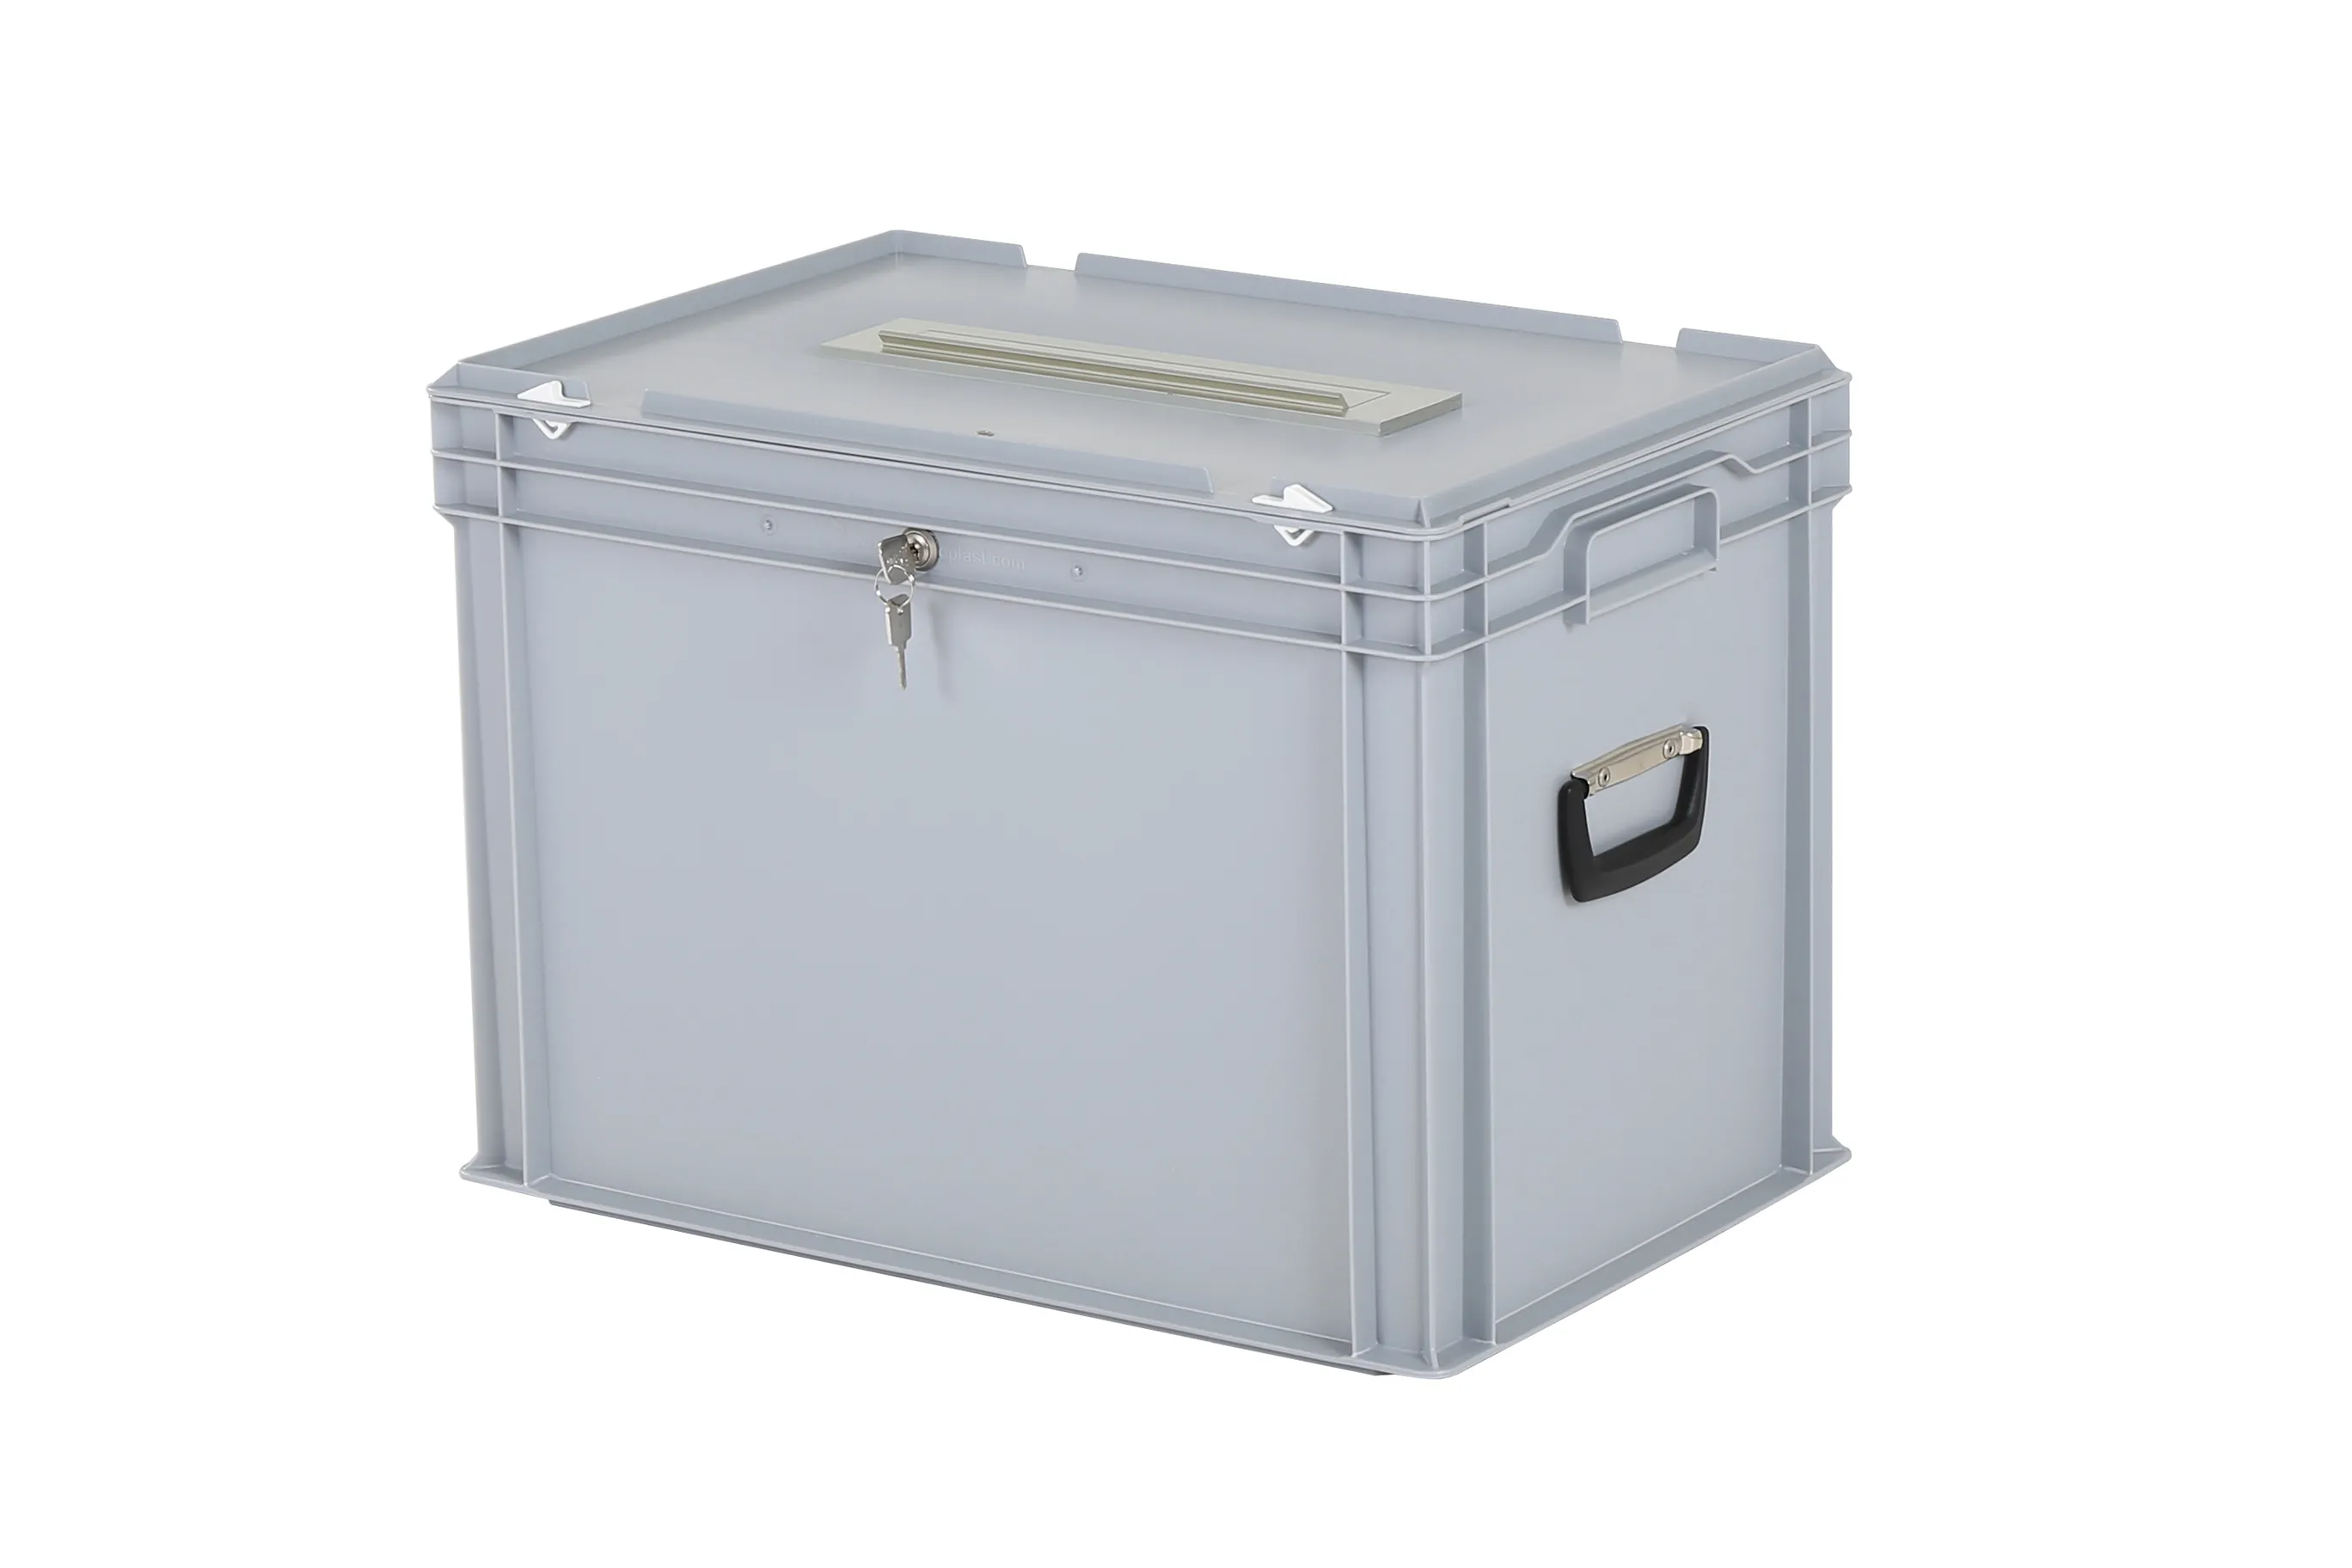 Ballot box | Transport box with mailbox flap and lock - 600 x 400 x H 439 mm - grey | Single-keyed lock 